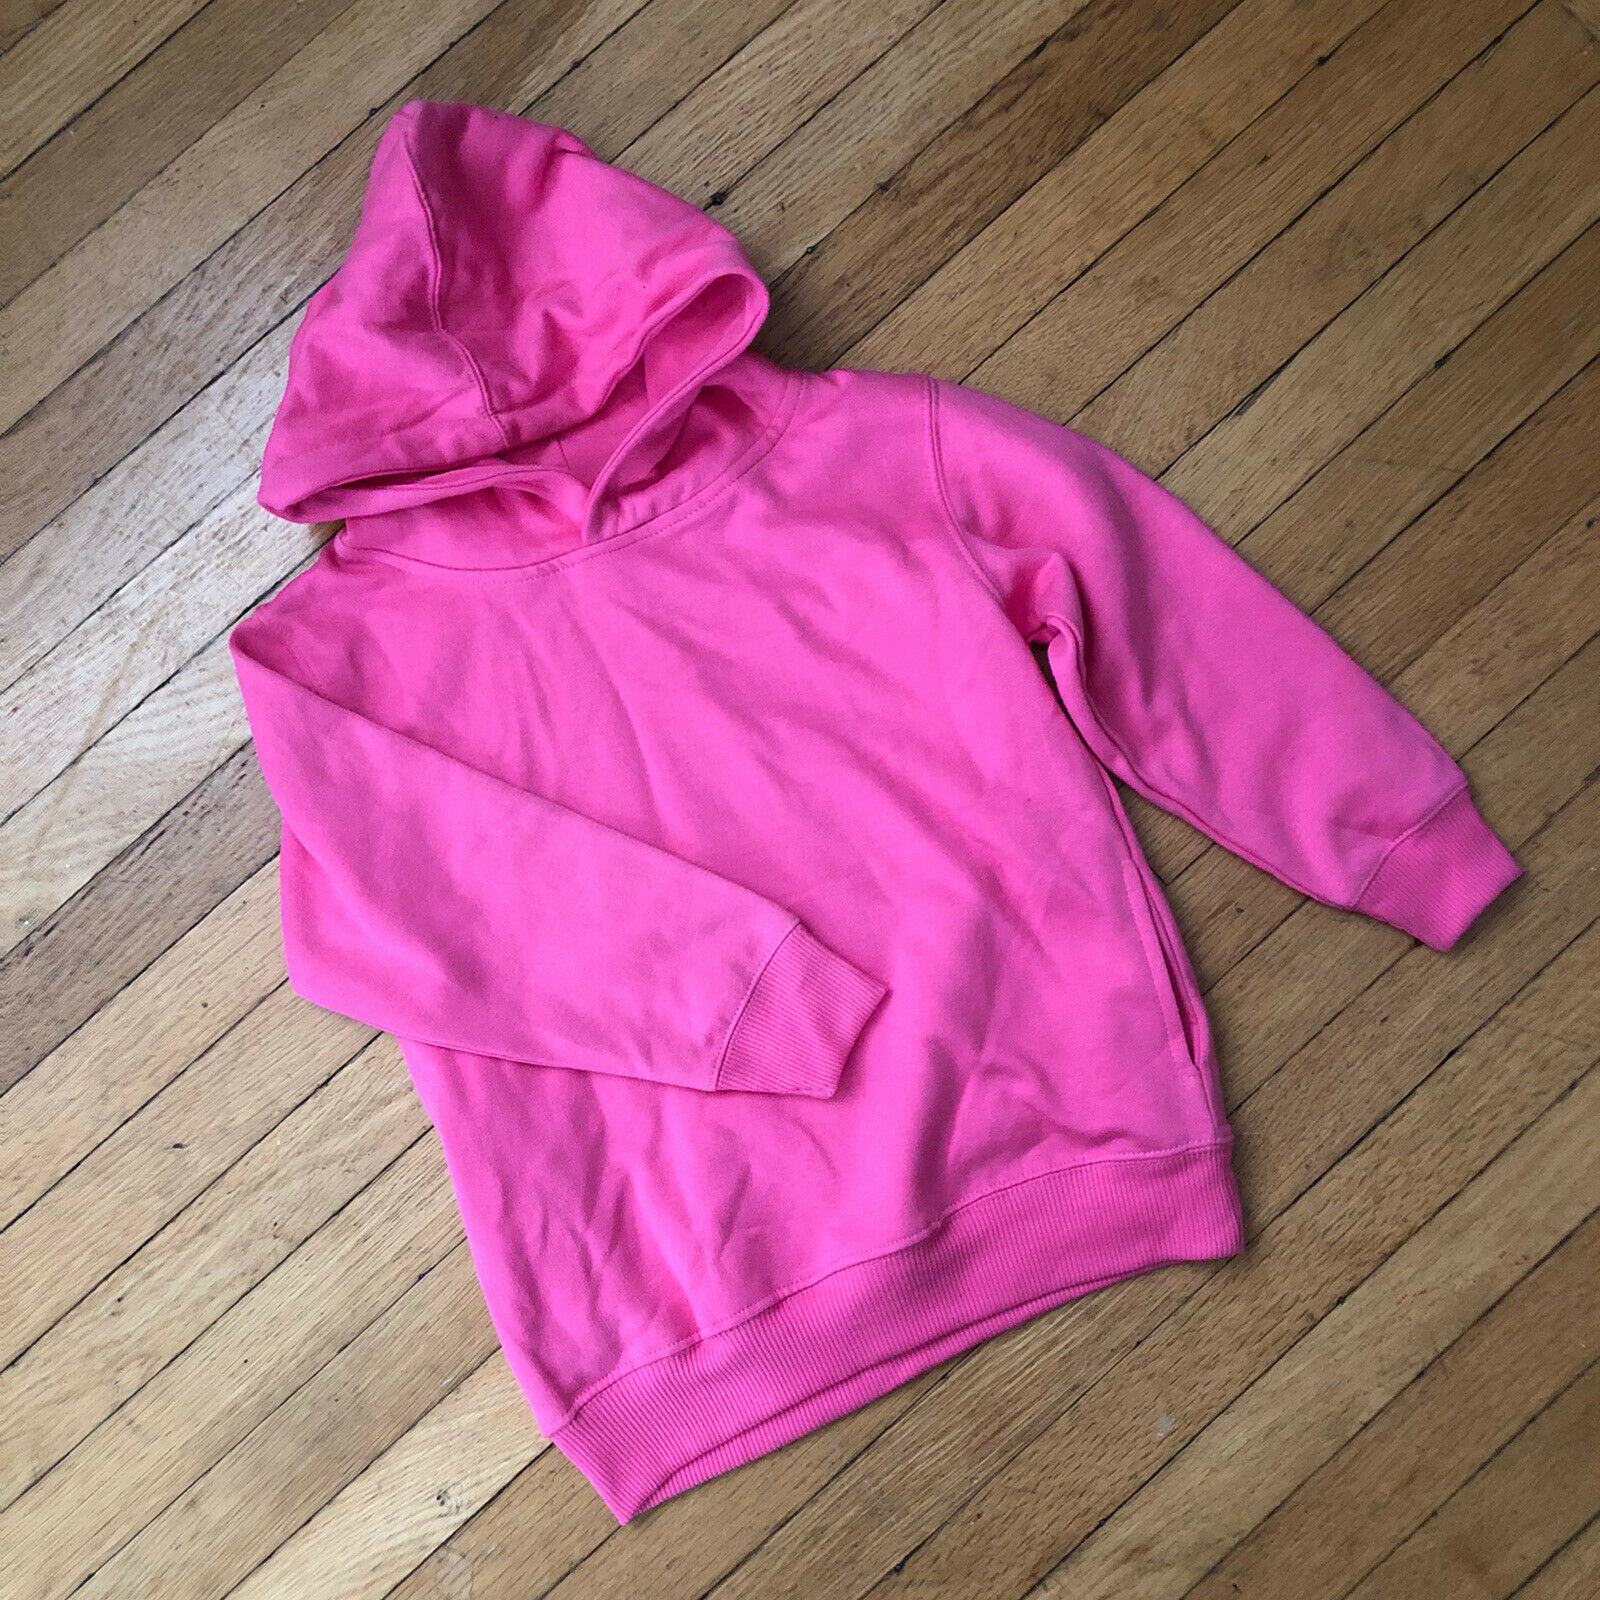 Hot Pink Hoodie Girls Size 5/6 Rabbit Skins Pockets Sweatshirt Toddler Bright